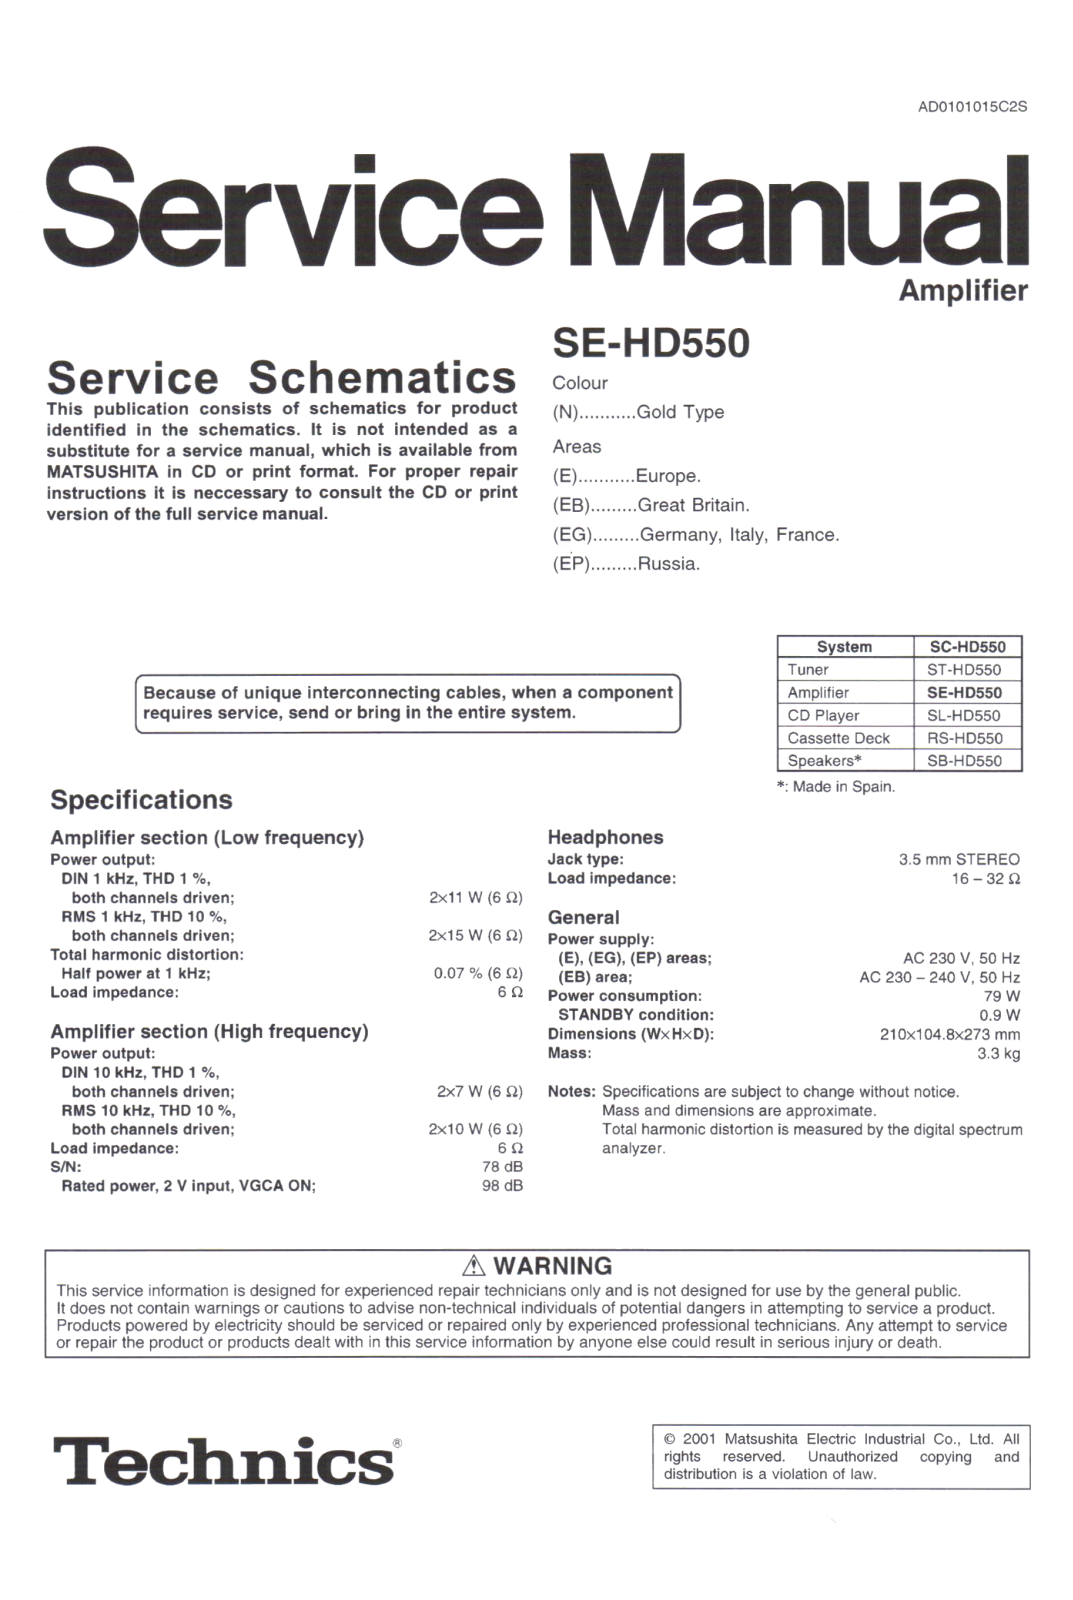 Technics SE-HD550 Service Manual